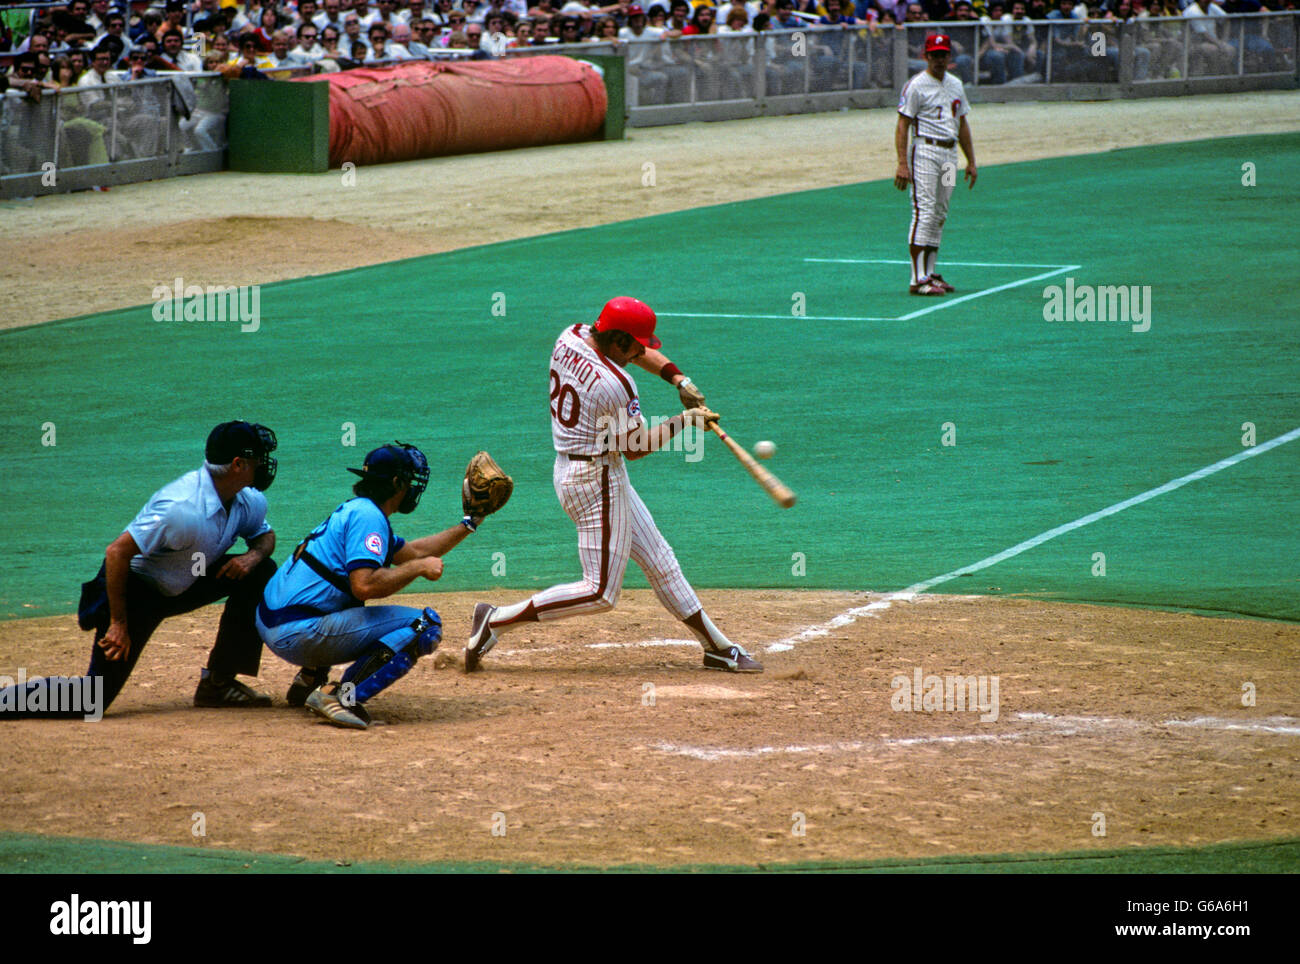 Anni ottanta MIKE SCHMIDT NUMERO 20 BATTING PHILLIES e Chicago Cubs Baseball gioco Veteran's Stadium di Philadelphia PA USA Foto Stock